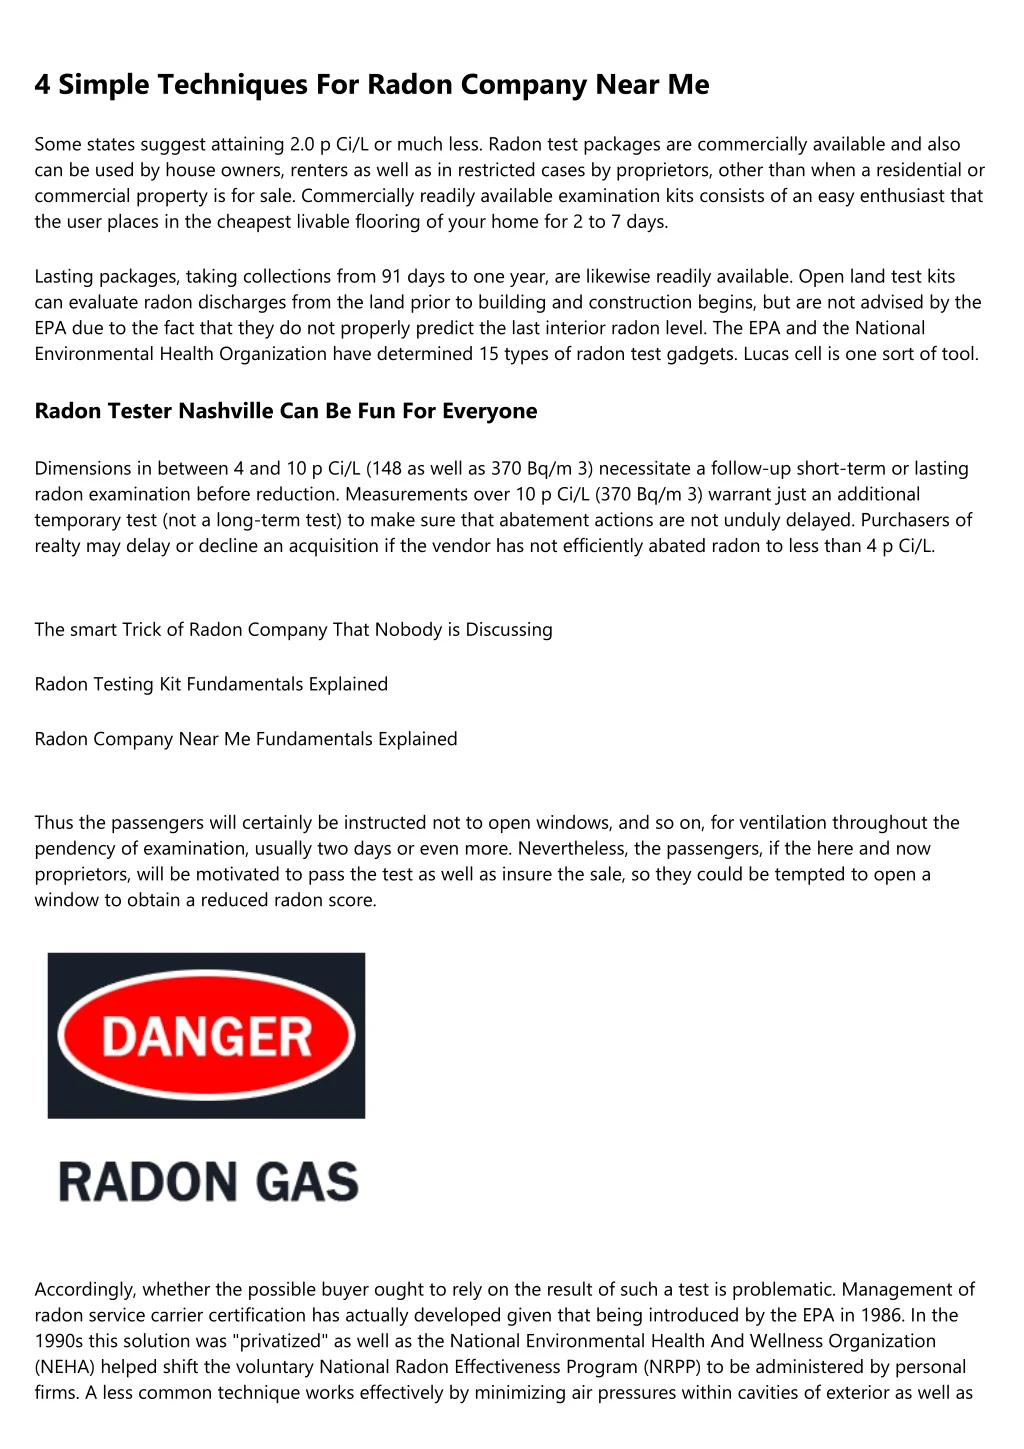 4 simple techniques for radon company near me